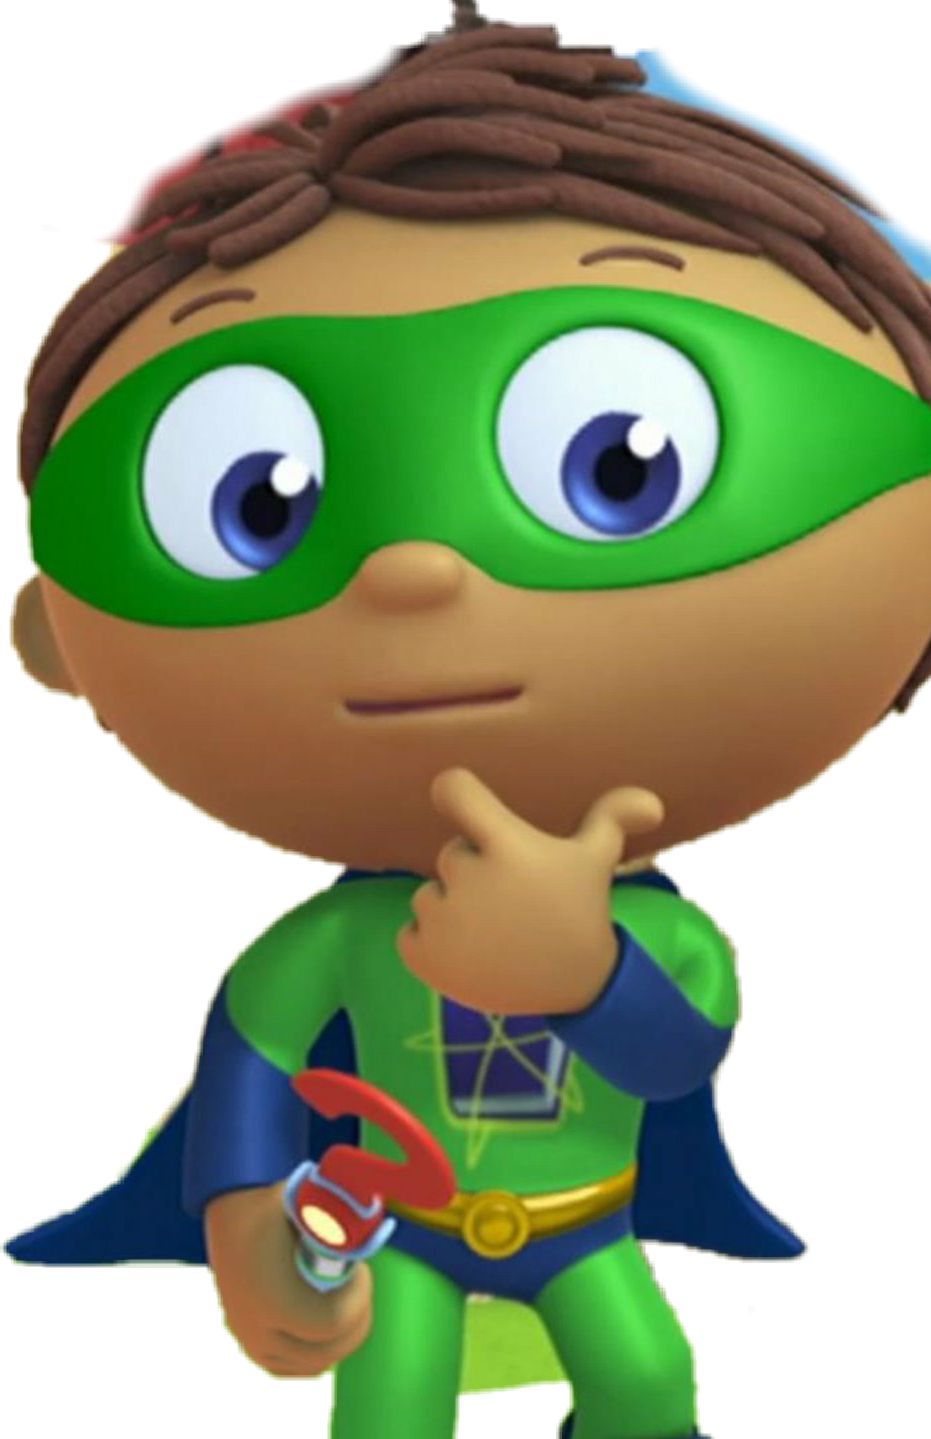 Superhero Child Cartoon Character PNG